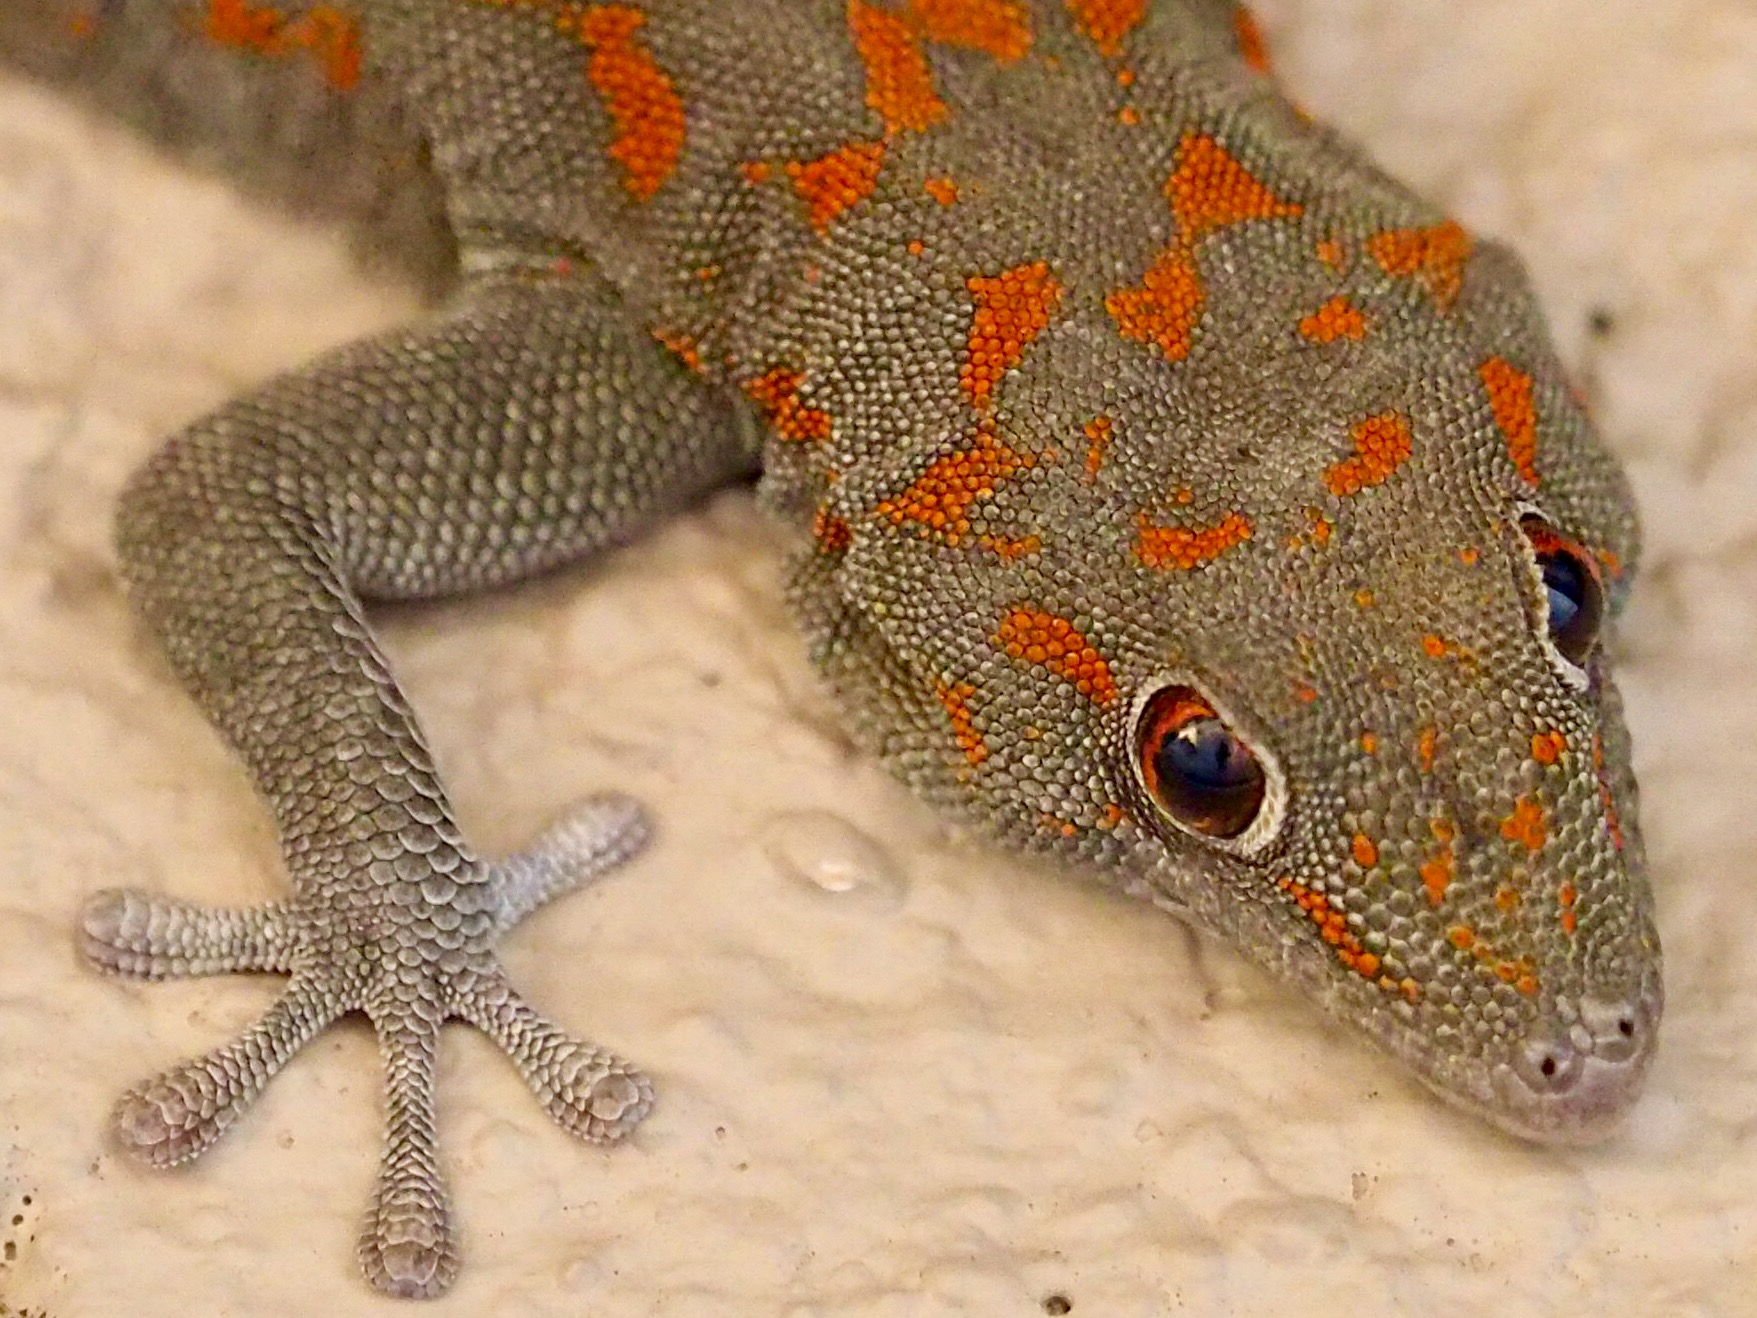 Namibian gecko...